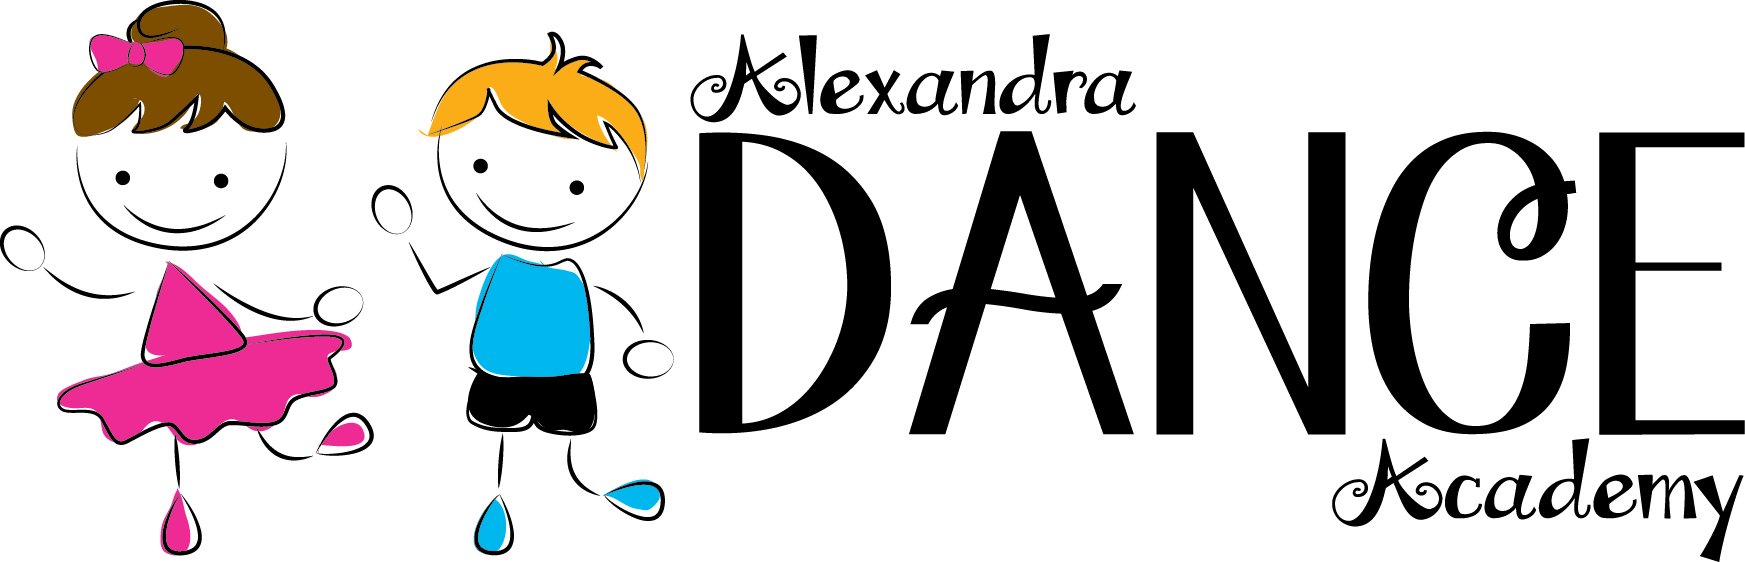 The Alexandra Dance Academy logo